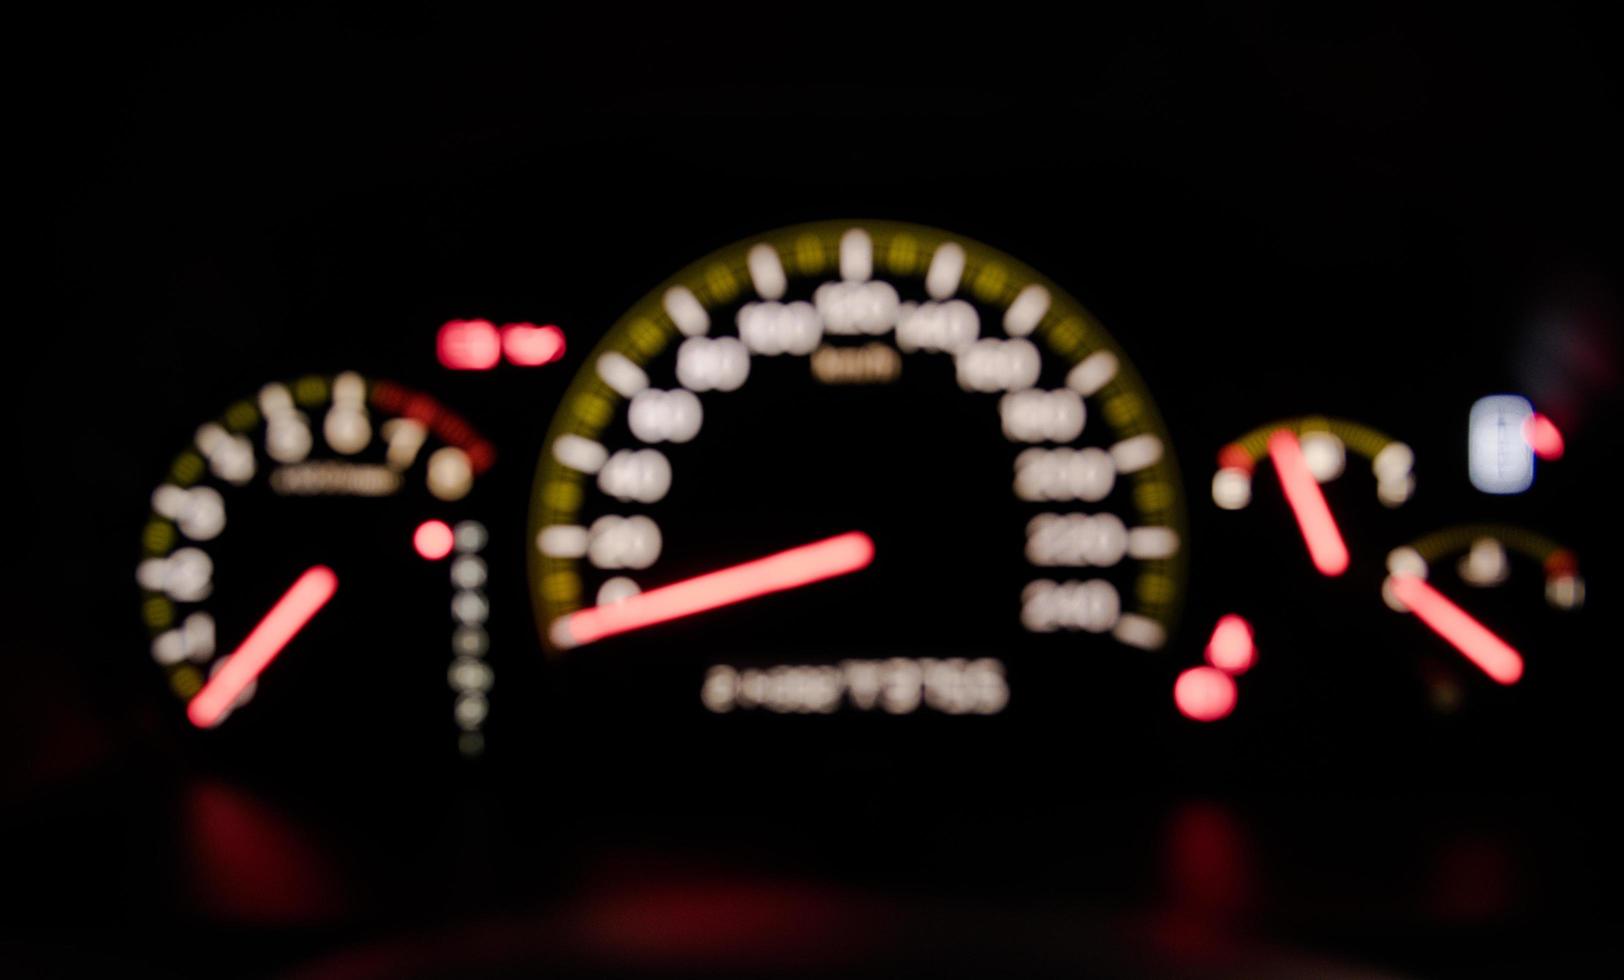 blur closeup car dashboard photo